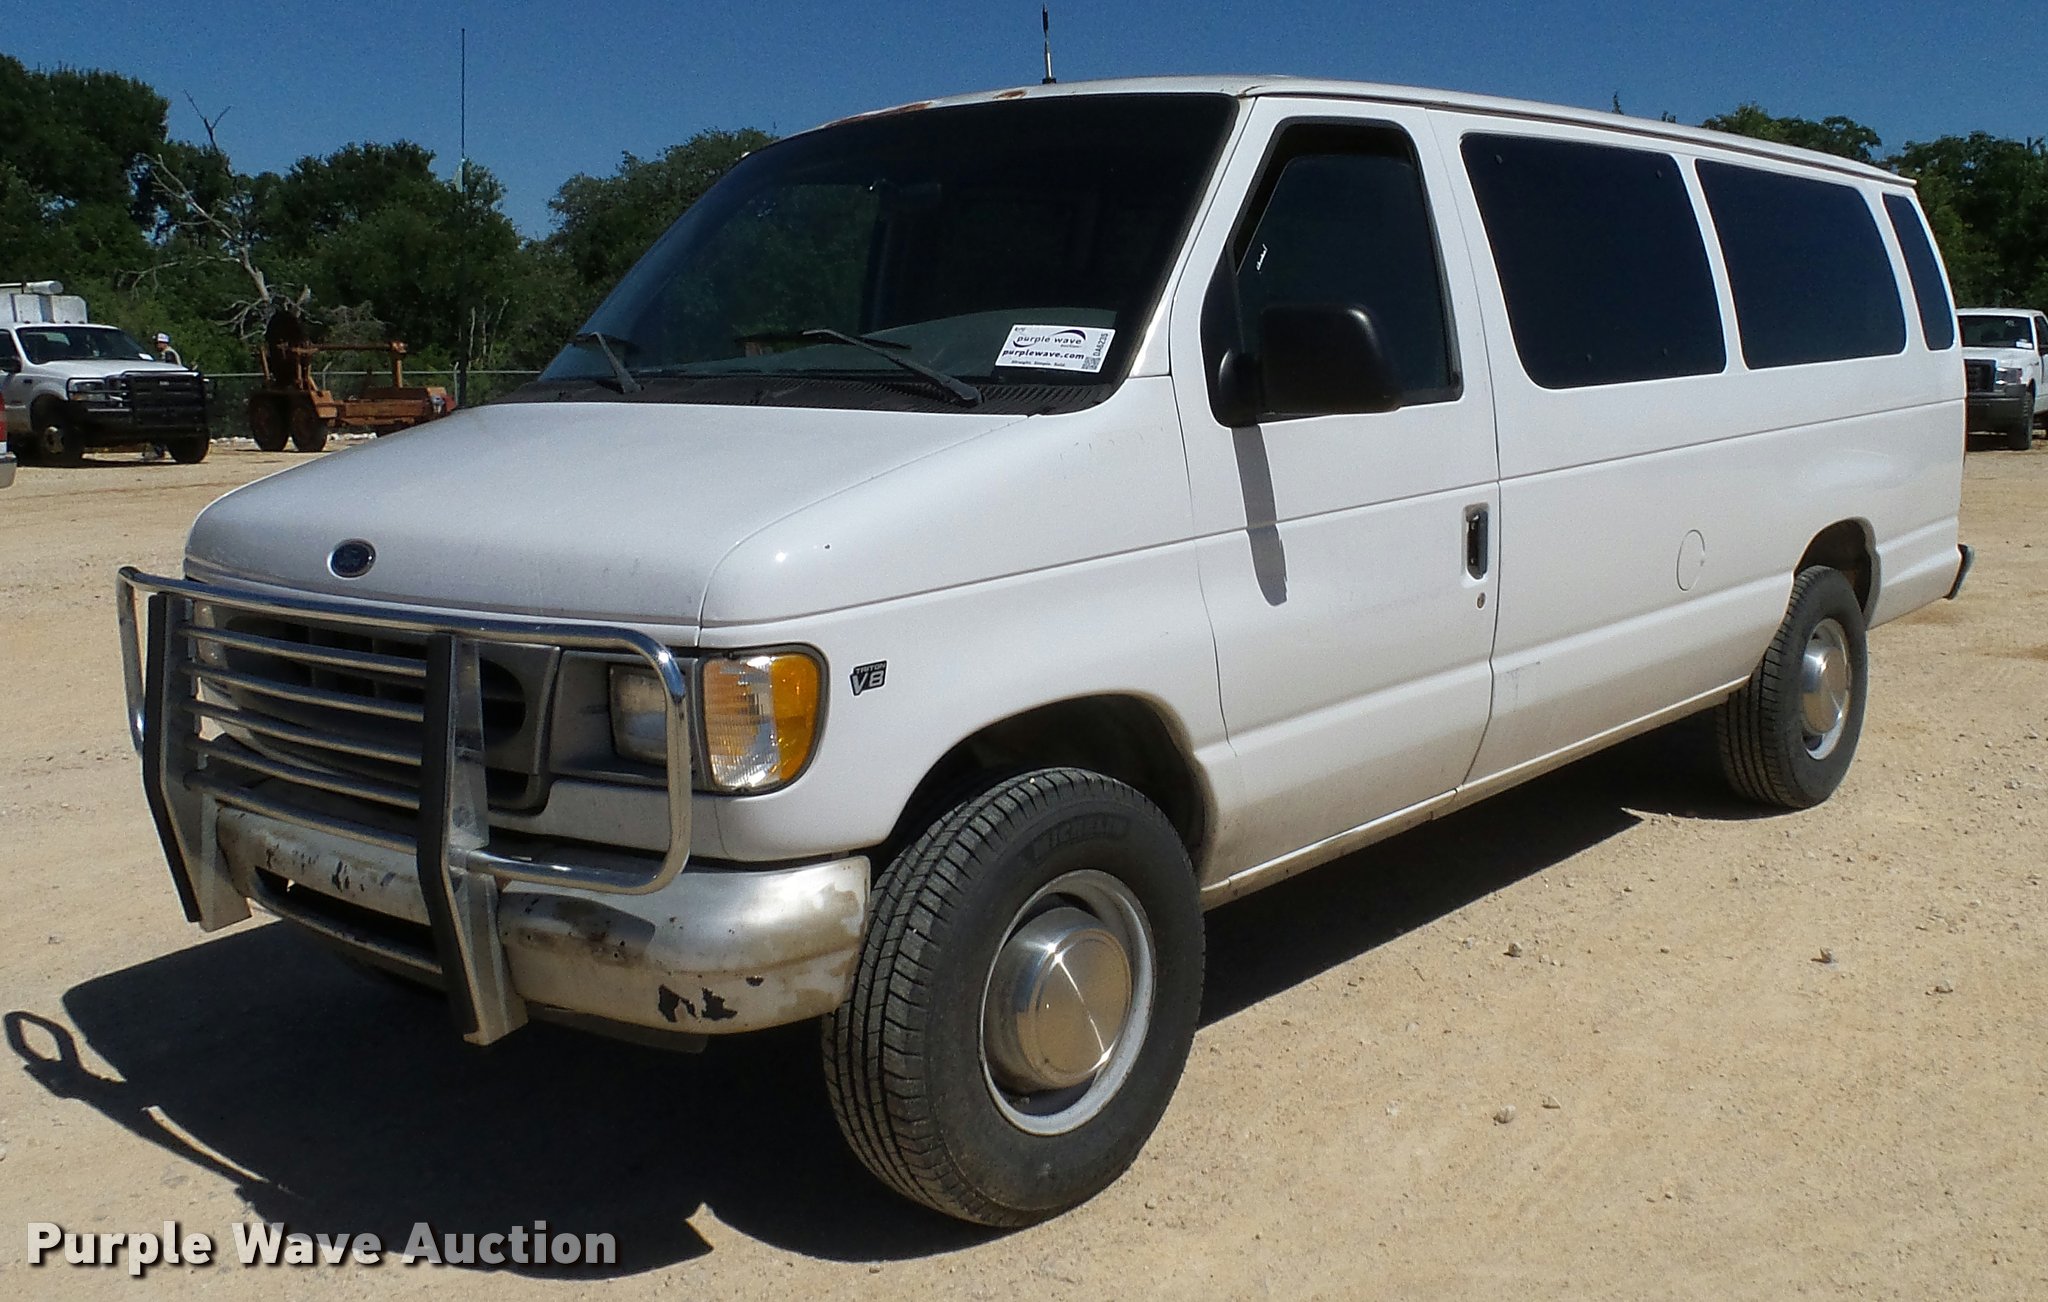 2000 Ford Econoline E250 Extended van in Austin, TX | Item DA6235 sold |  Purple Wave